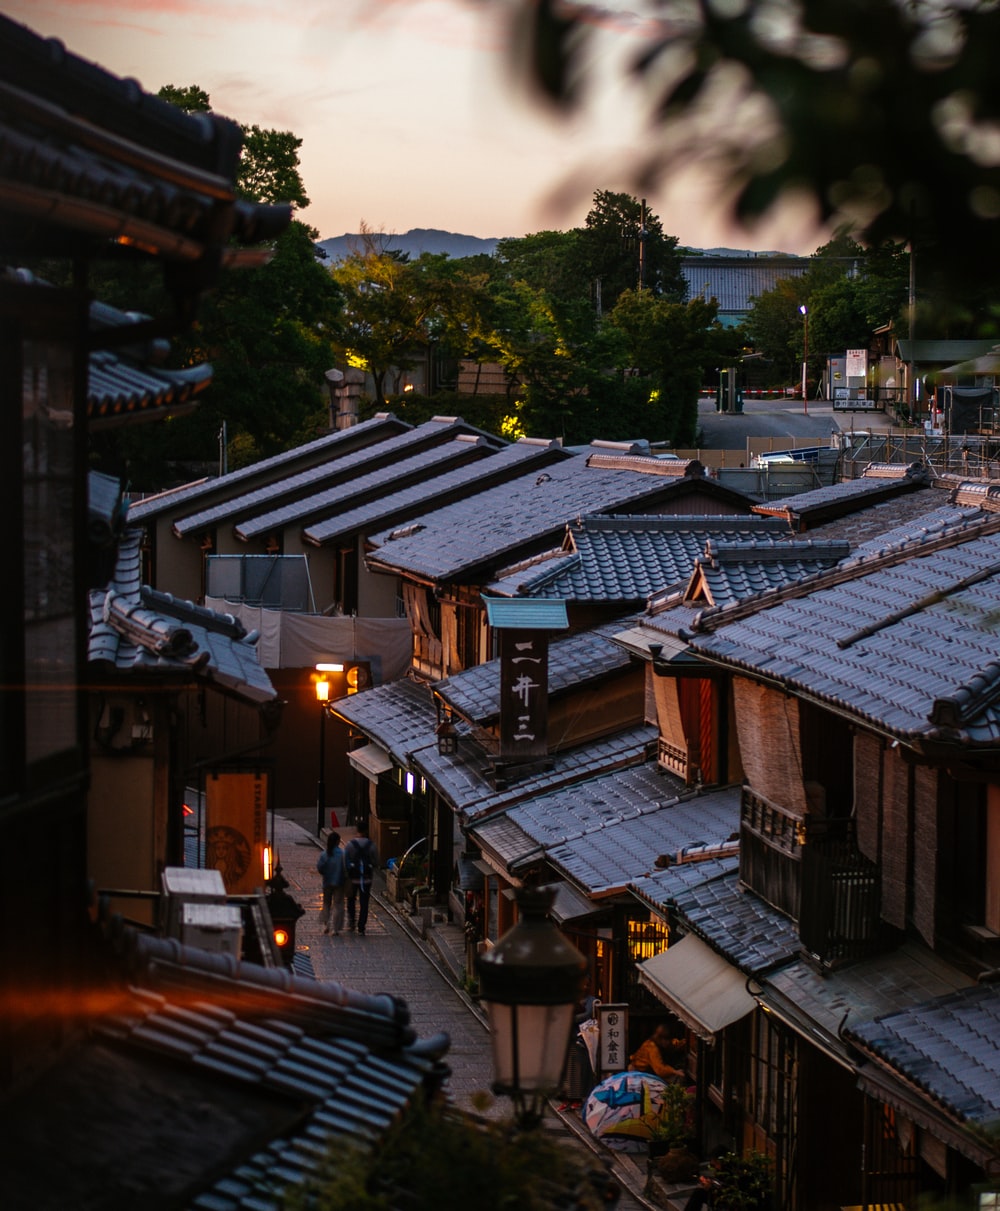 Japan Village Picture. Download Free Image